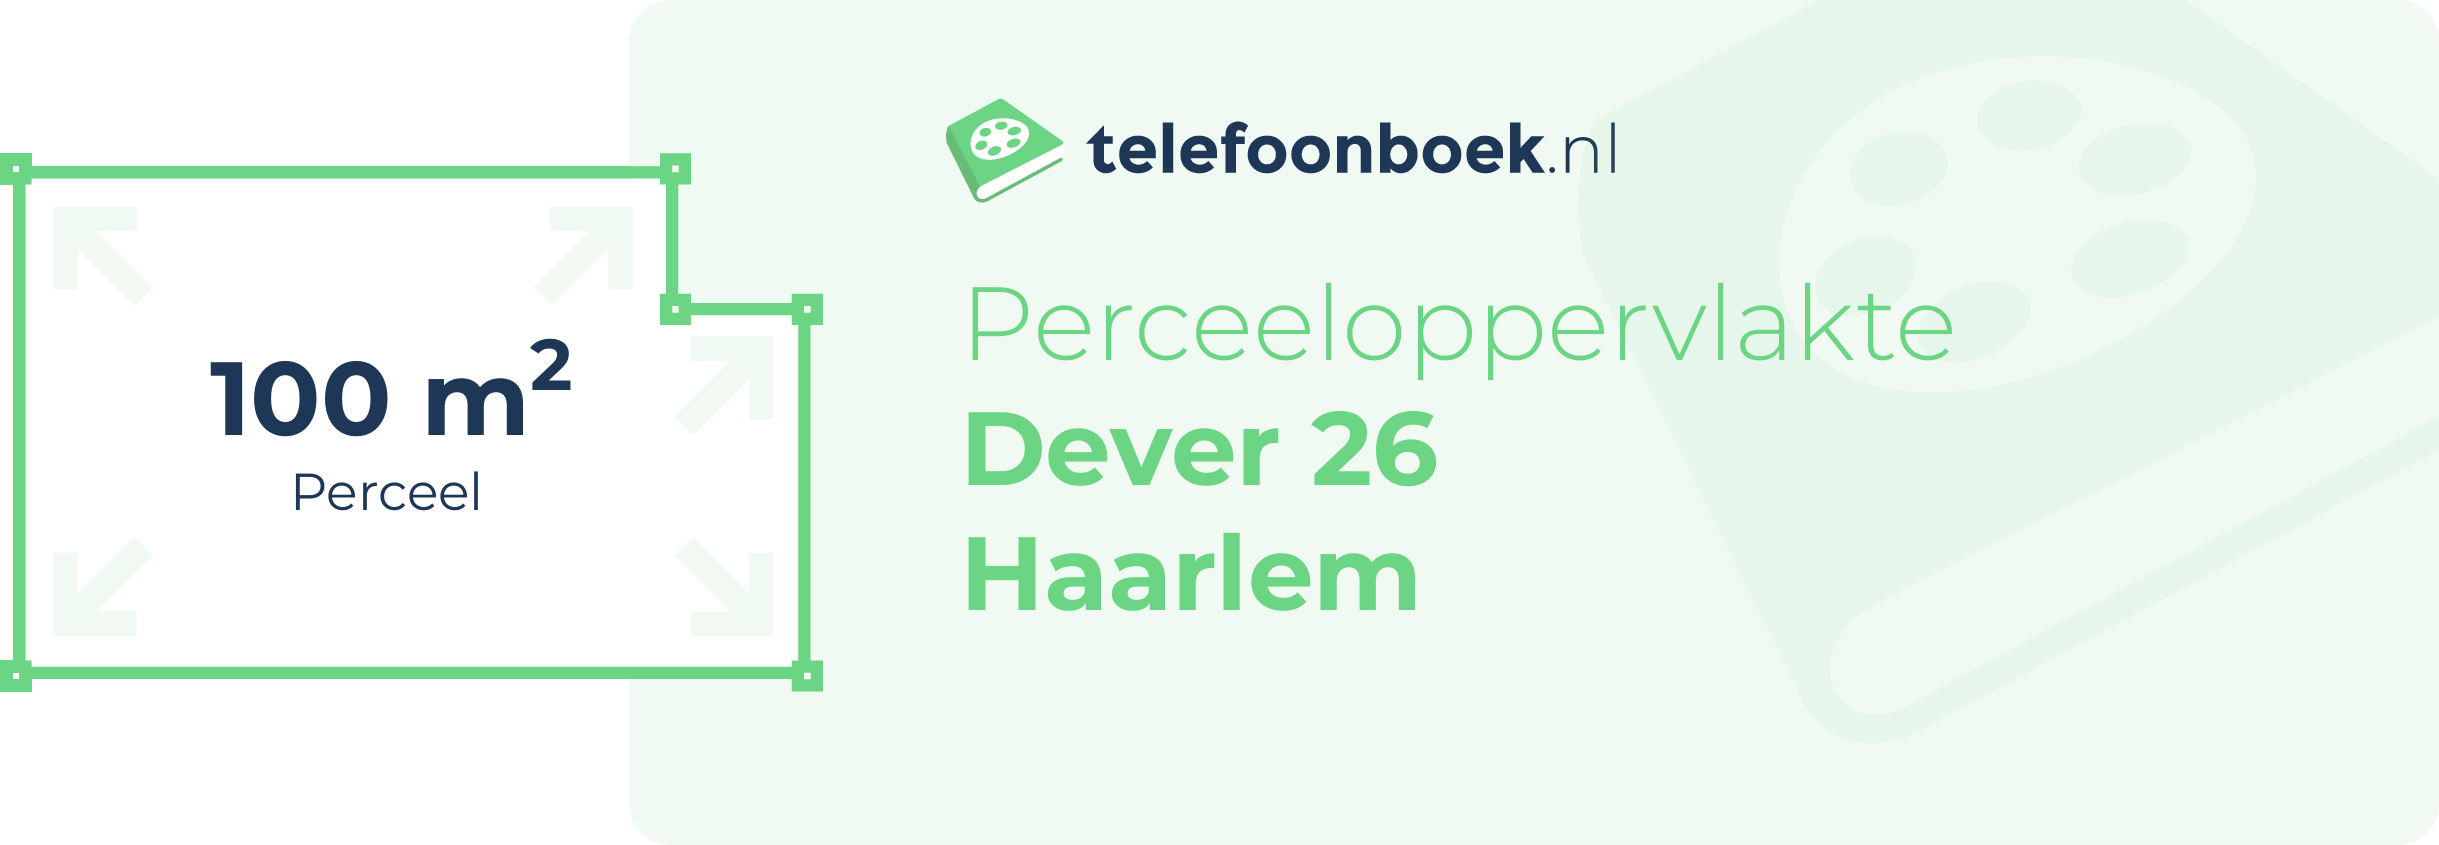 Perceeloppervlakte Dever 26 Haarlem